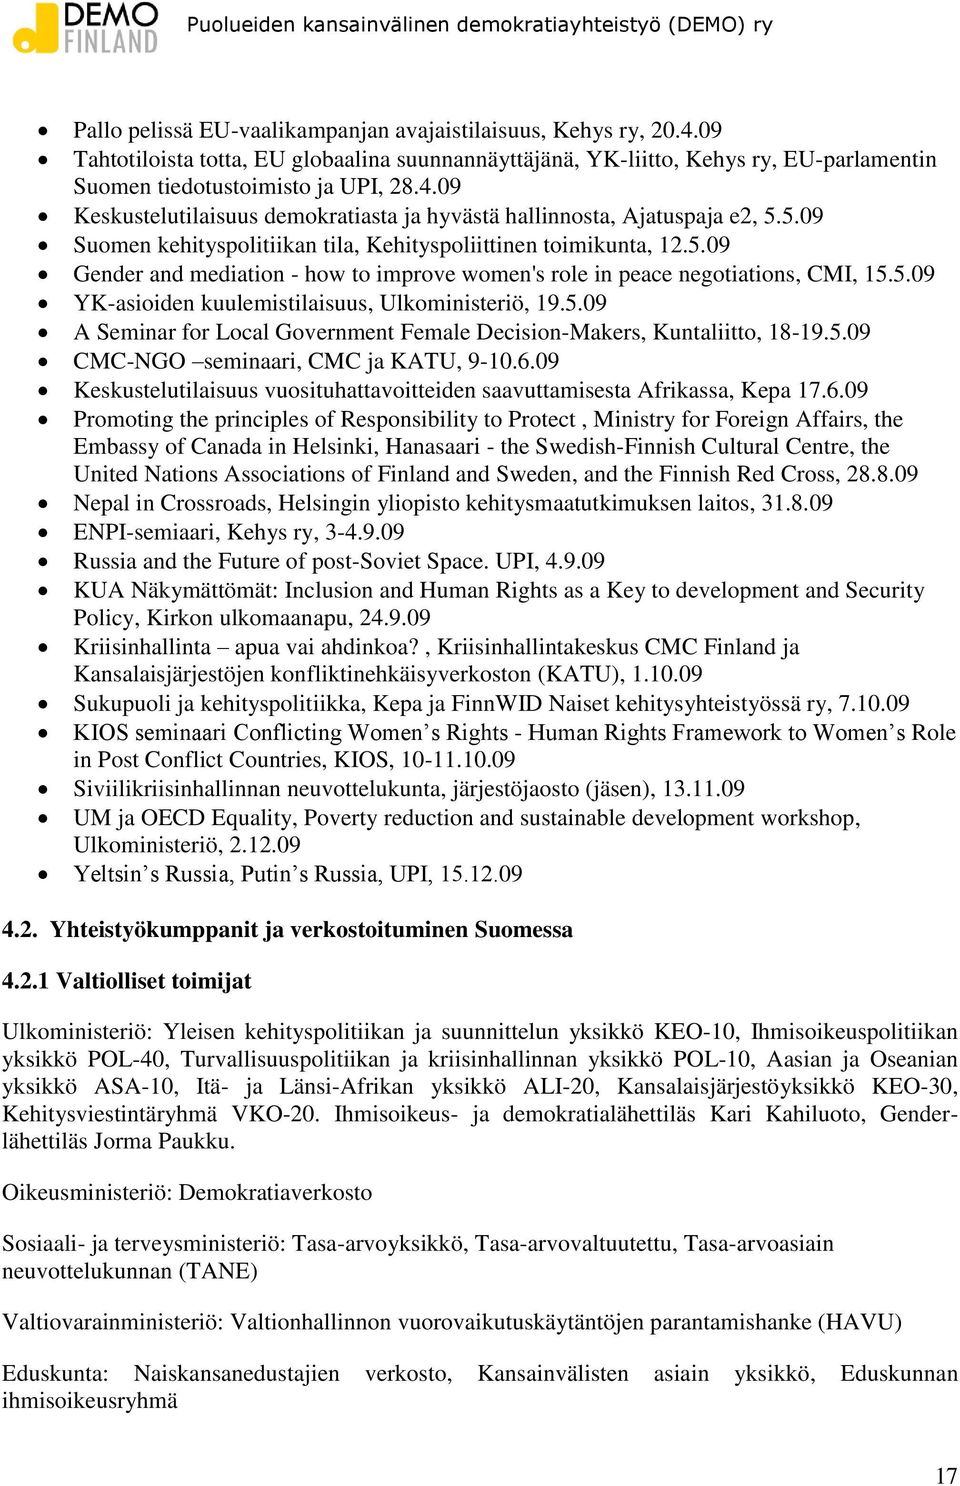 5.09 A Seminar for Local Government Female Decision-Makers, Kuntaliitto, 18-19.5.09 CMC-NGO seminaari, CMC ja KATU, 9-10.6.